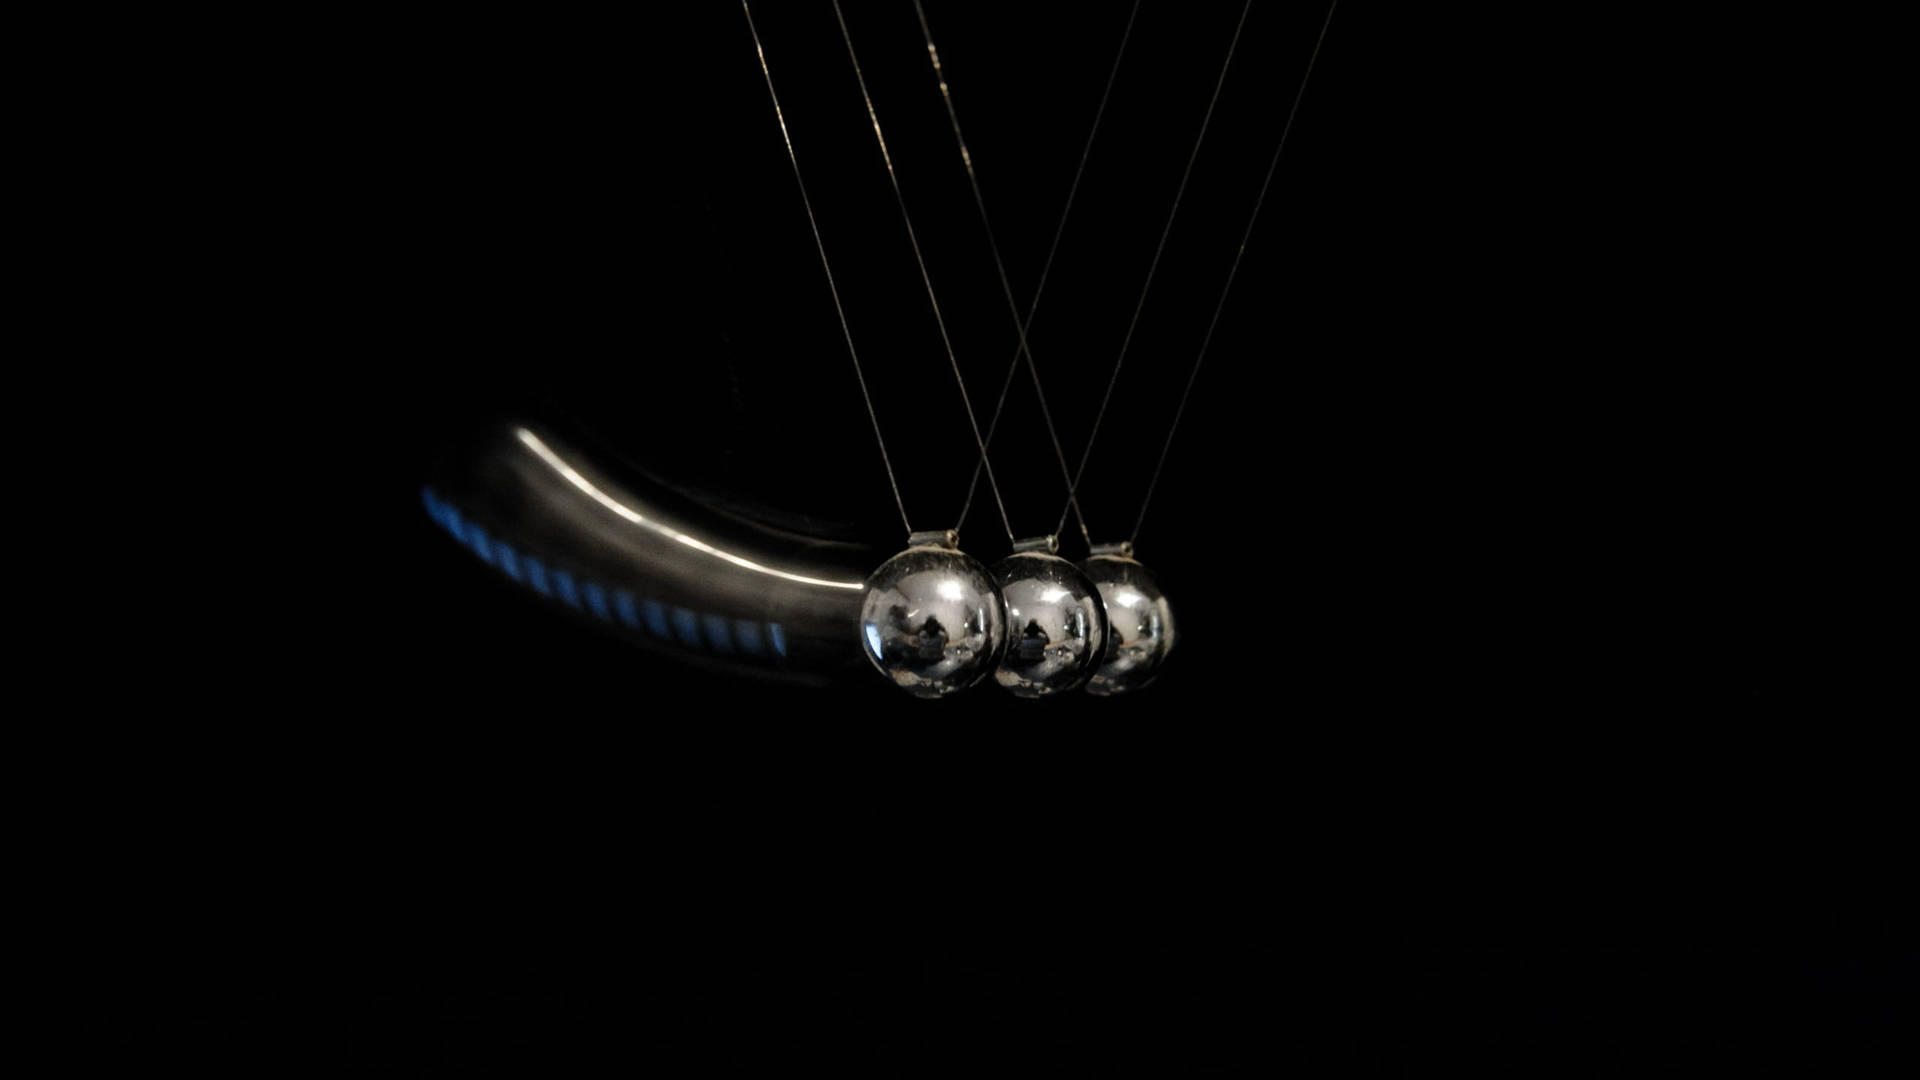 Black Dynamic Pendulum Swing Wallpaper